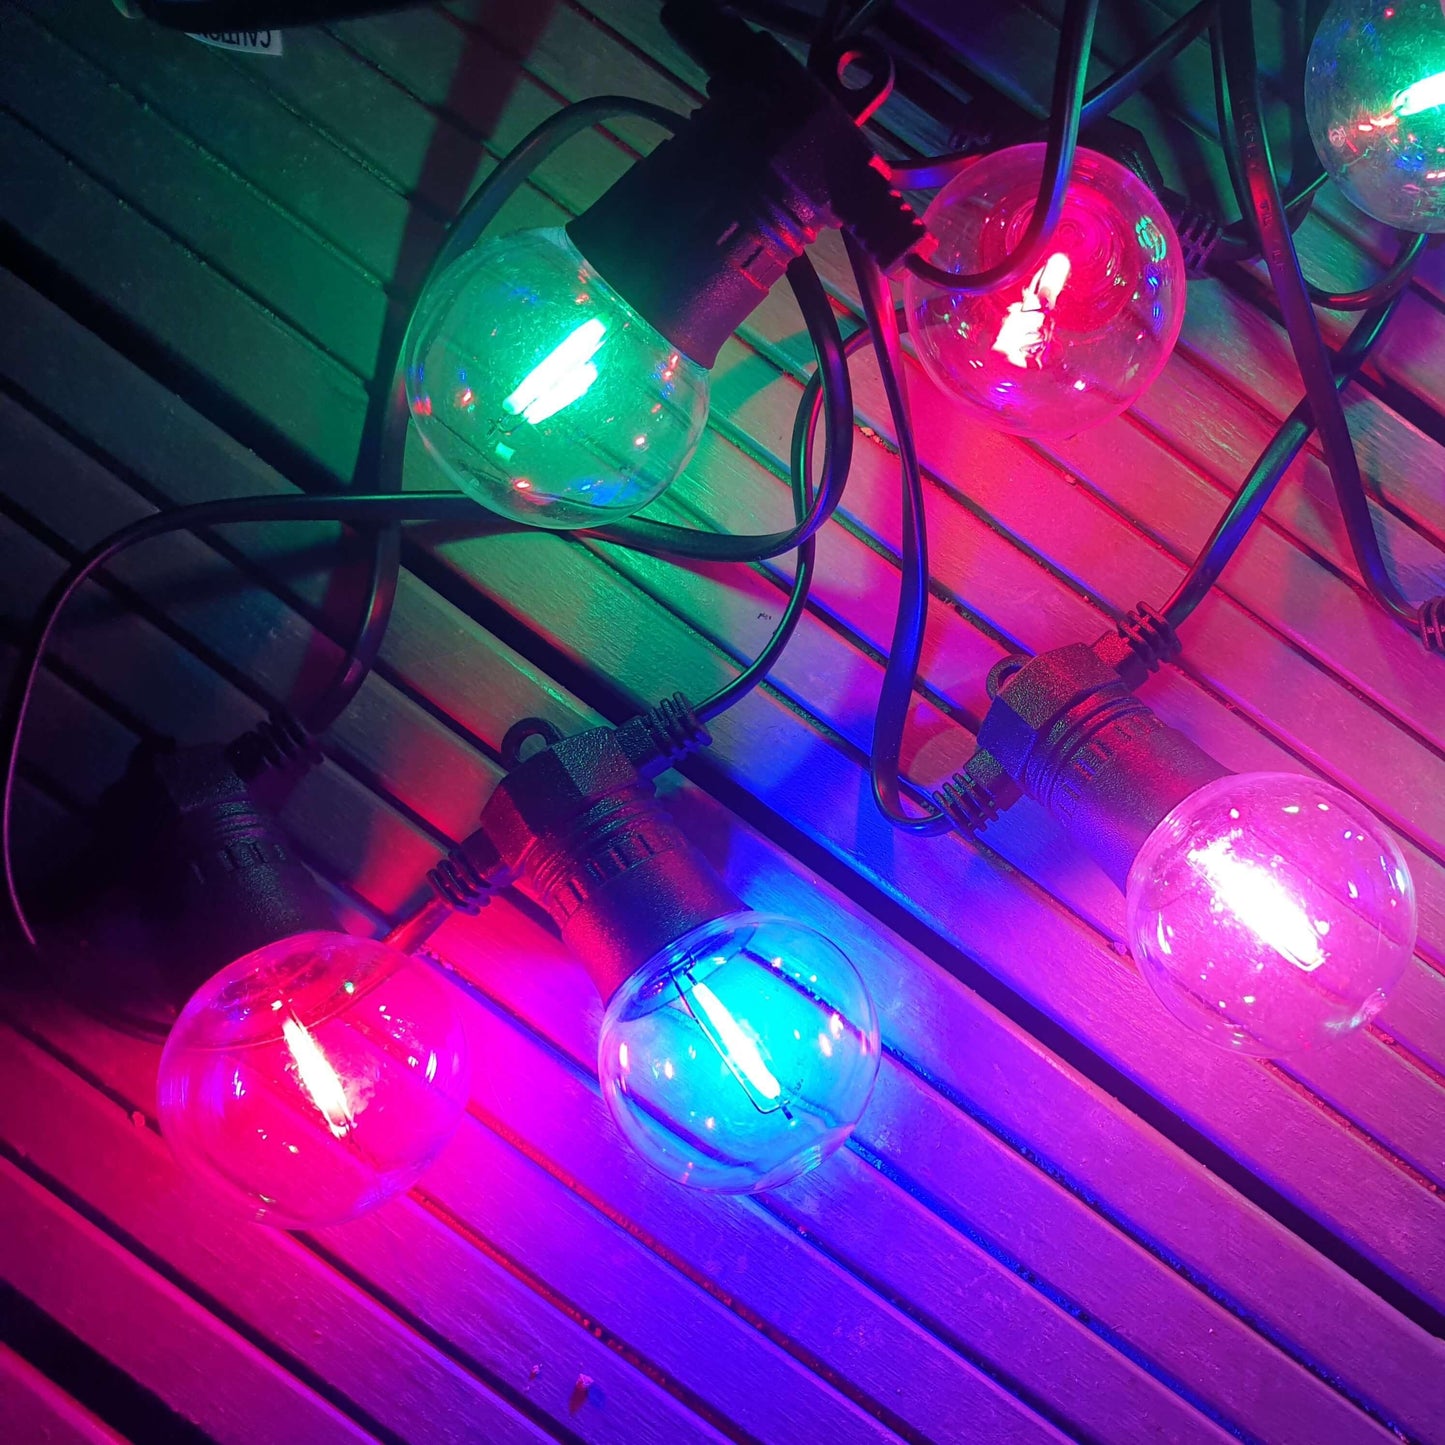 13M / 42FT "Super Festoon" Multi-Colour Festive Outdoor Plug-in Inter-connectable LED String Lights